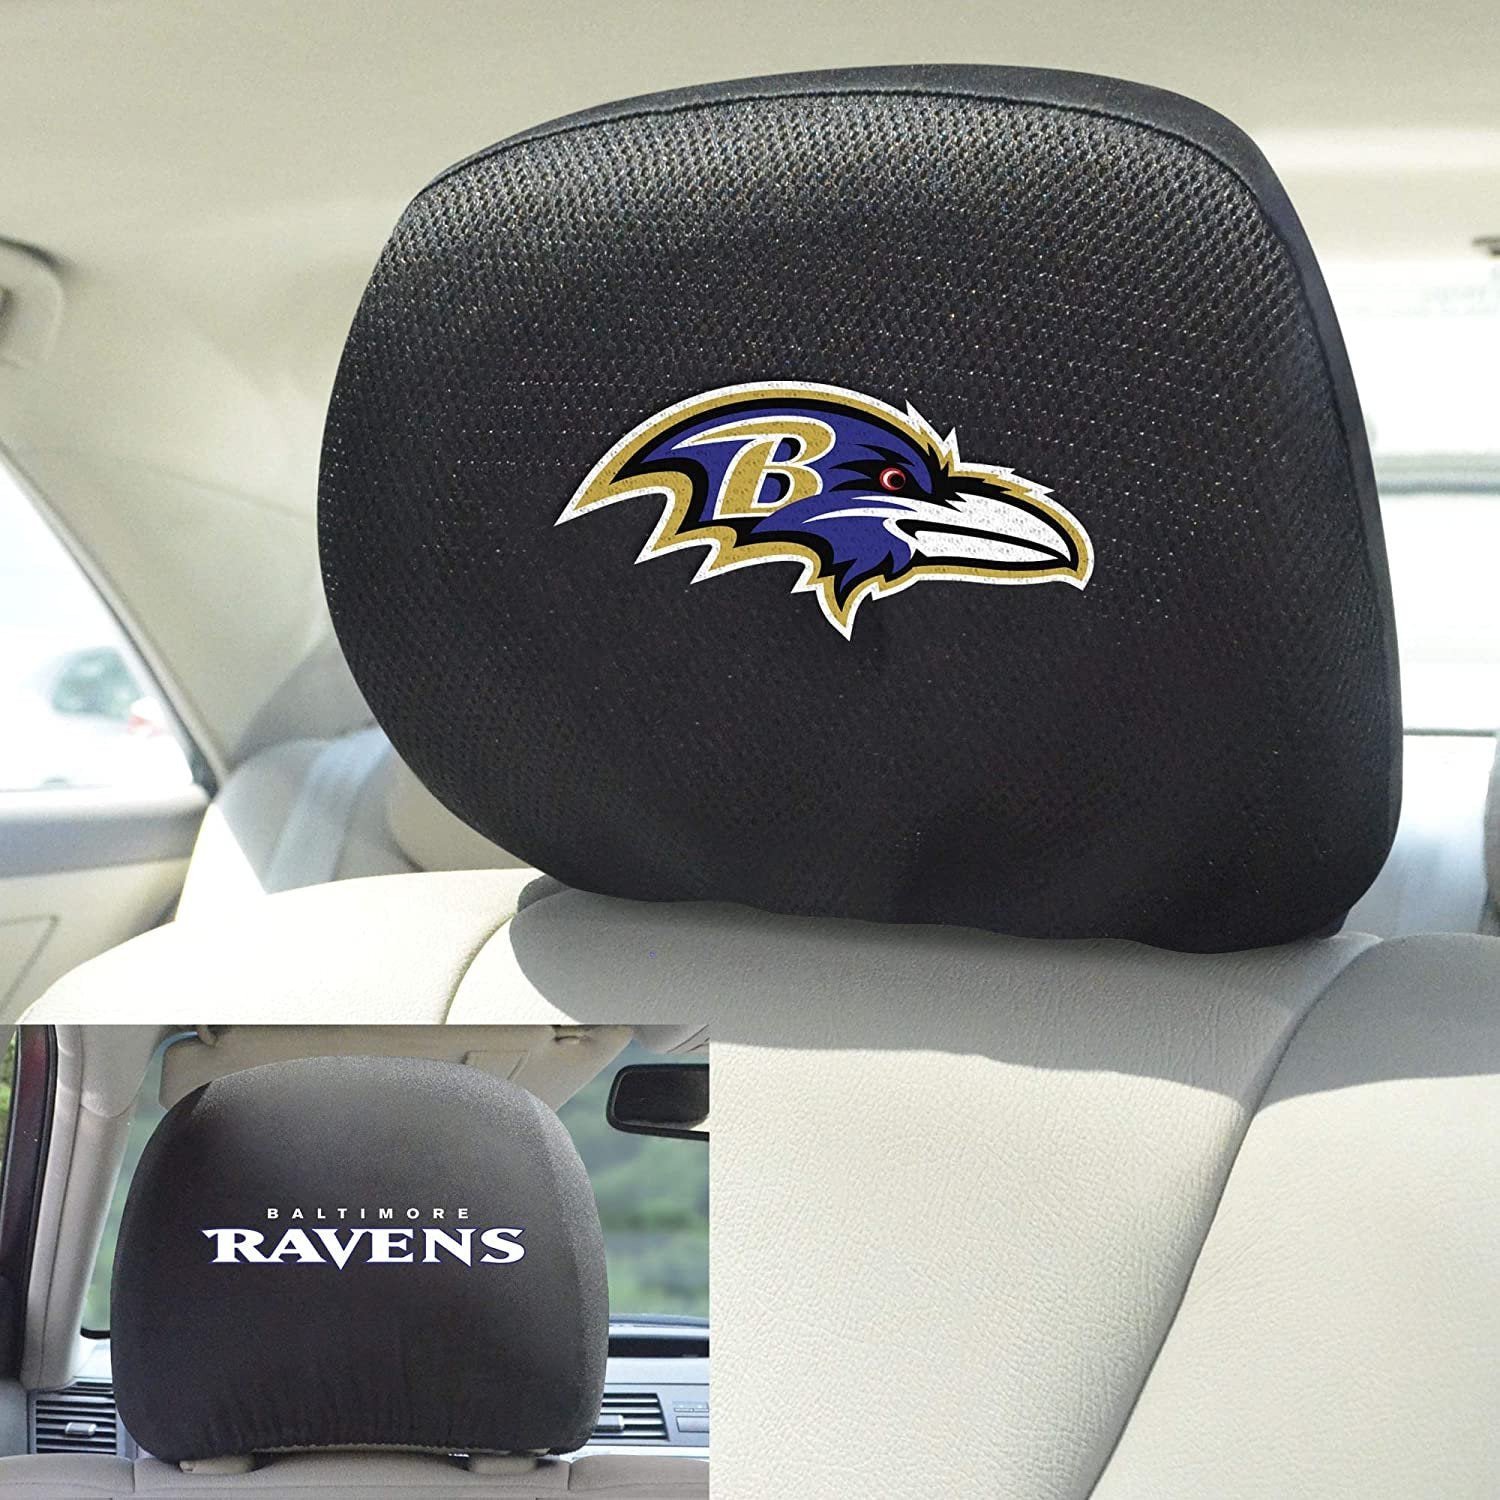 Baltimore Ravens Pair of Premium Auto Head Rest Covers, Embroidered, Black Elastic, 14x10 Inch